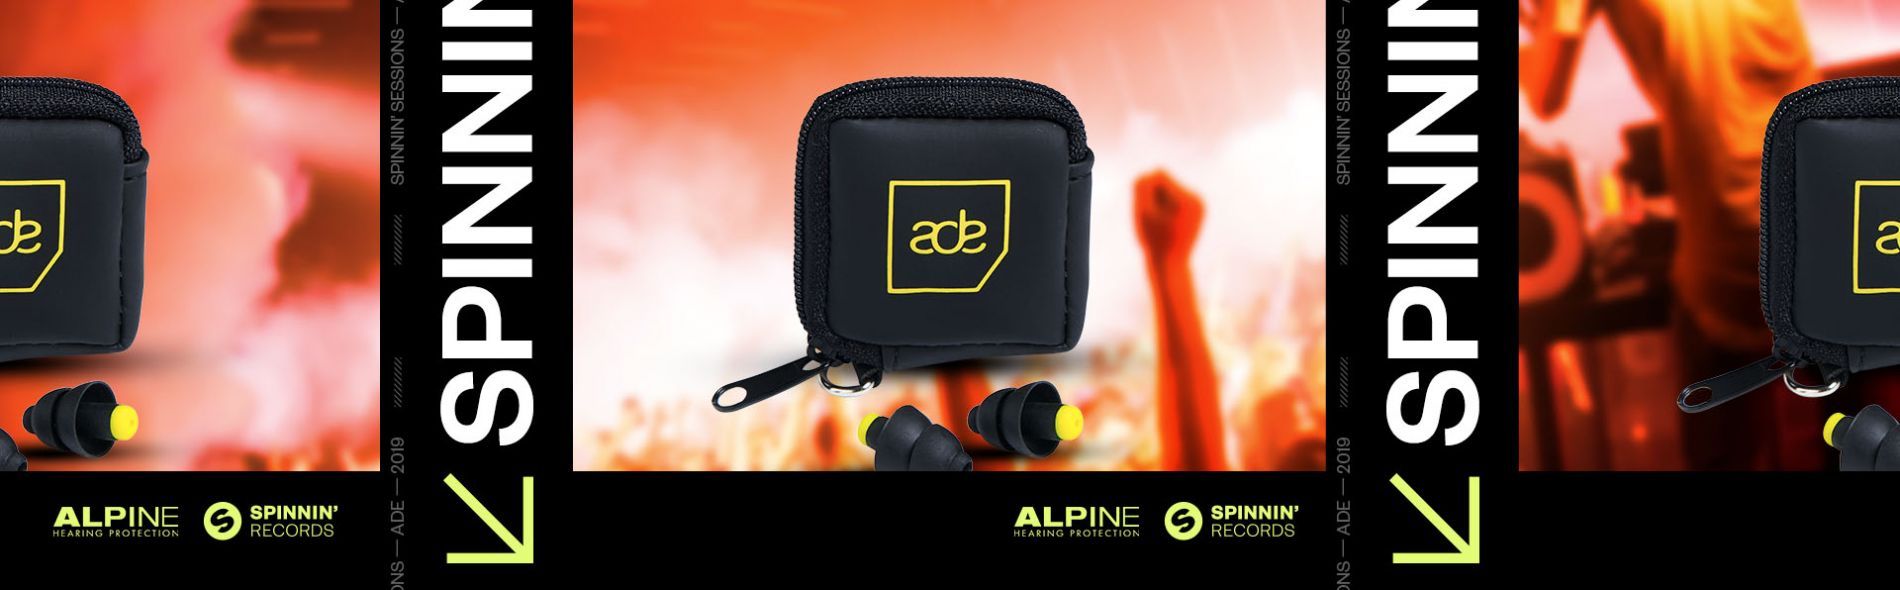 Alpine, Sam Feldt & Spinnin’ Records team up to raise awareness for hearing protection